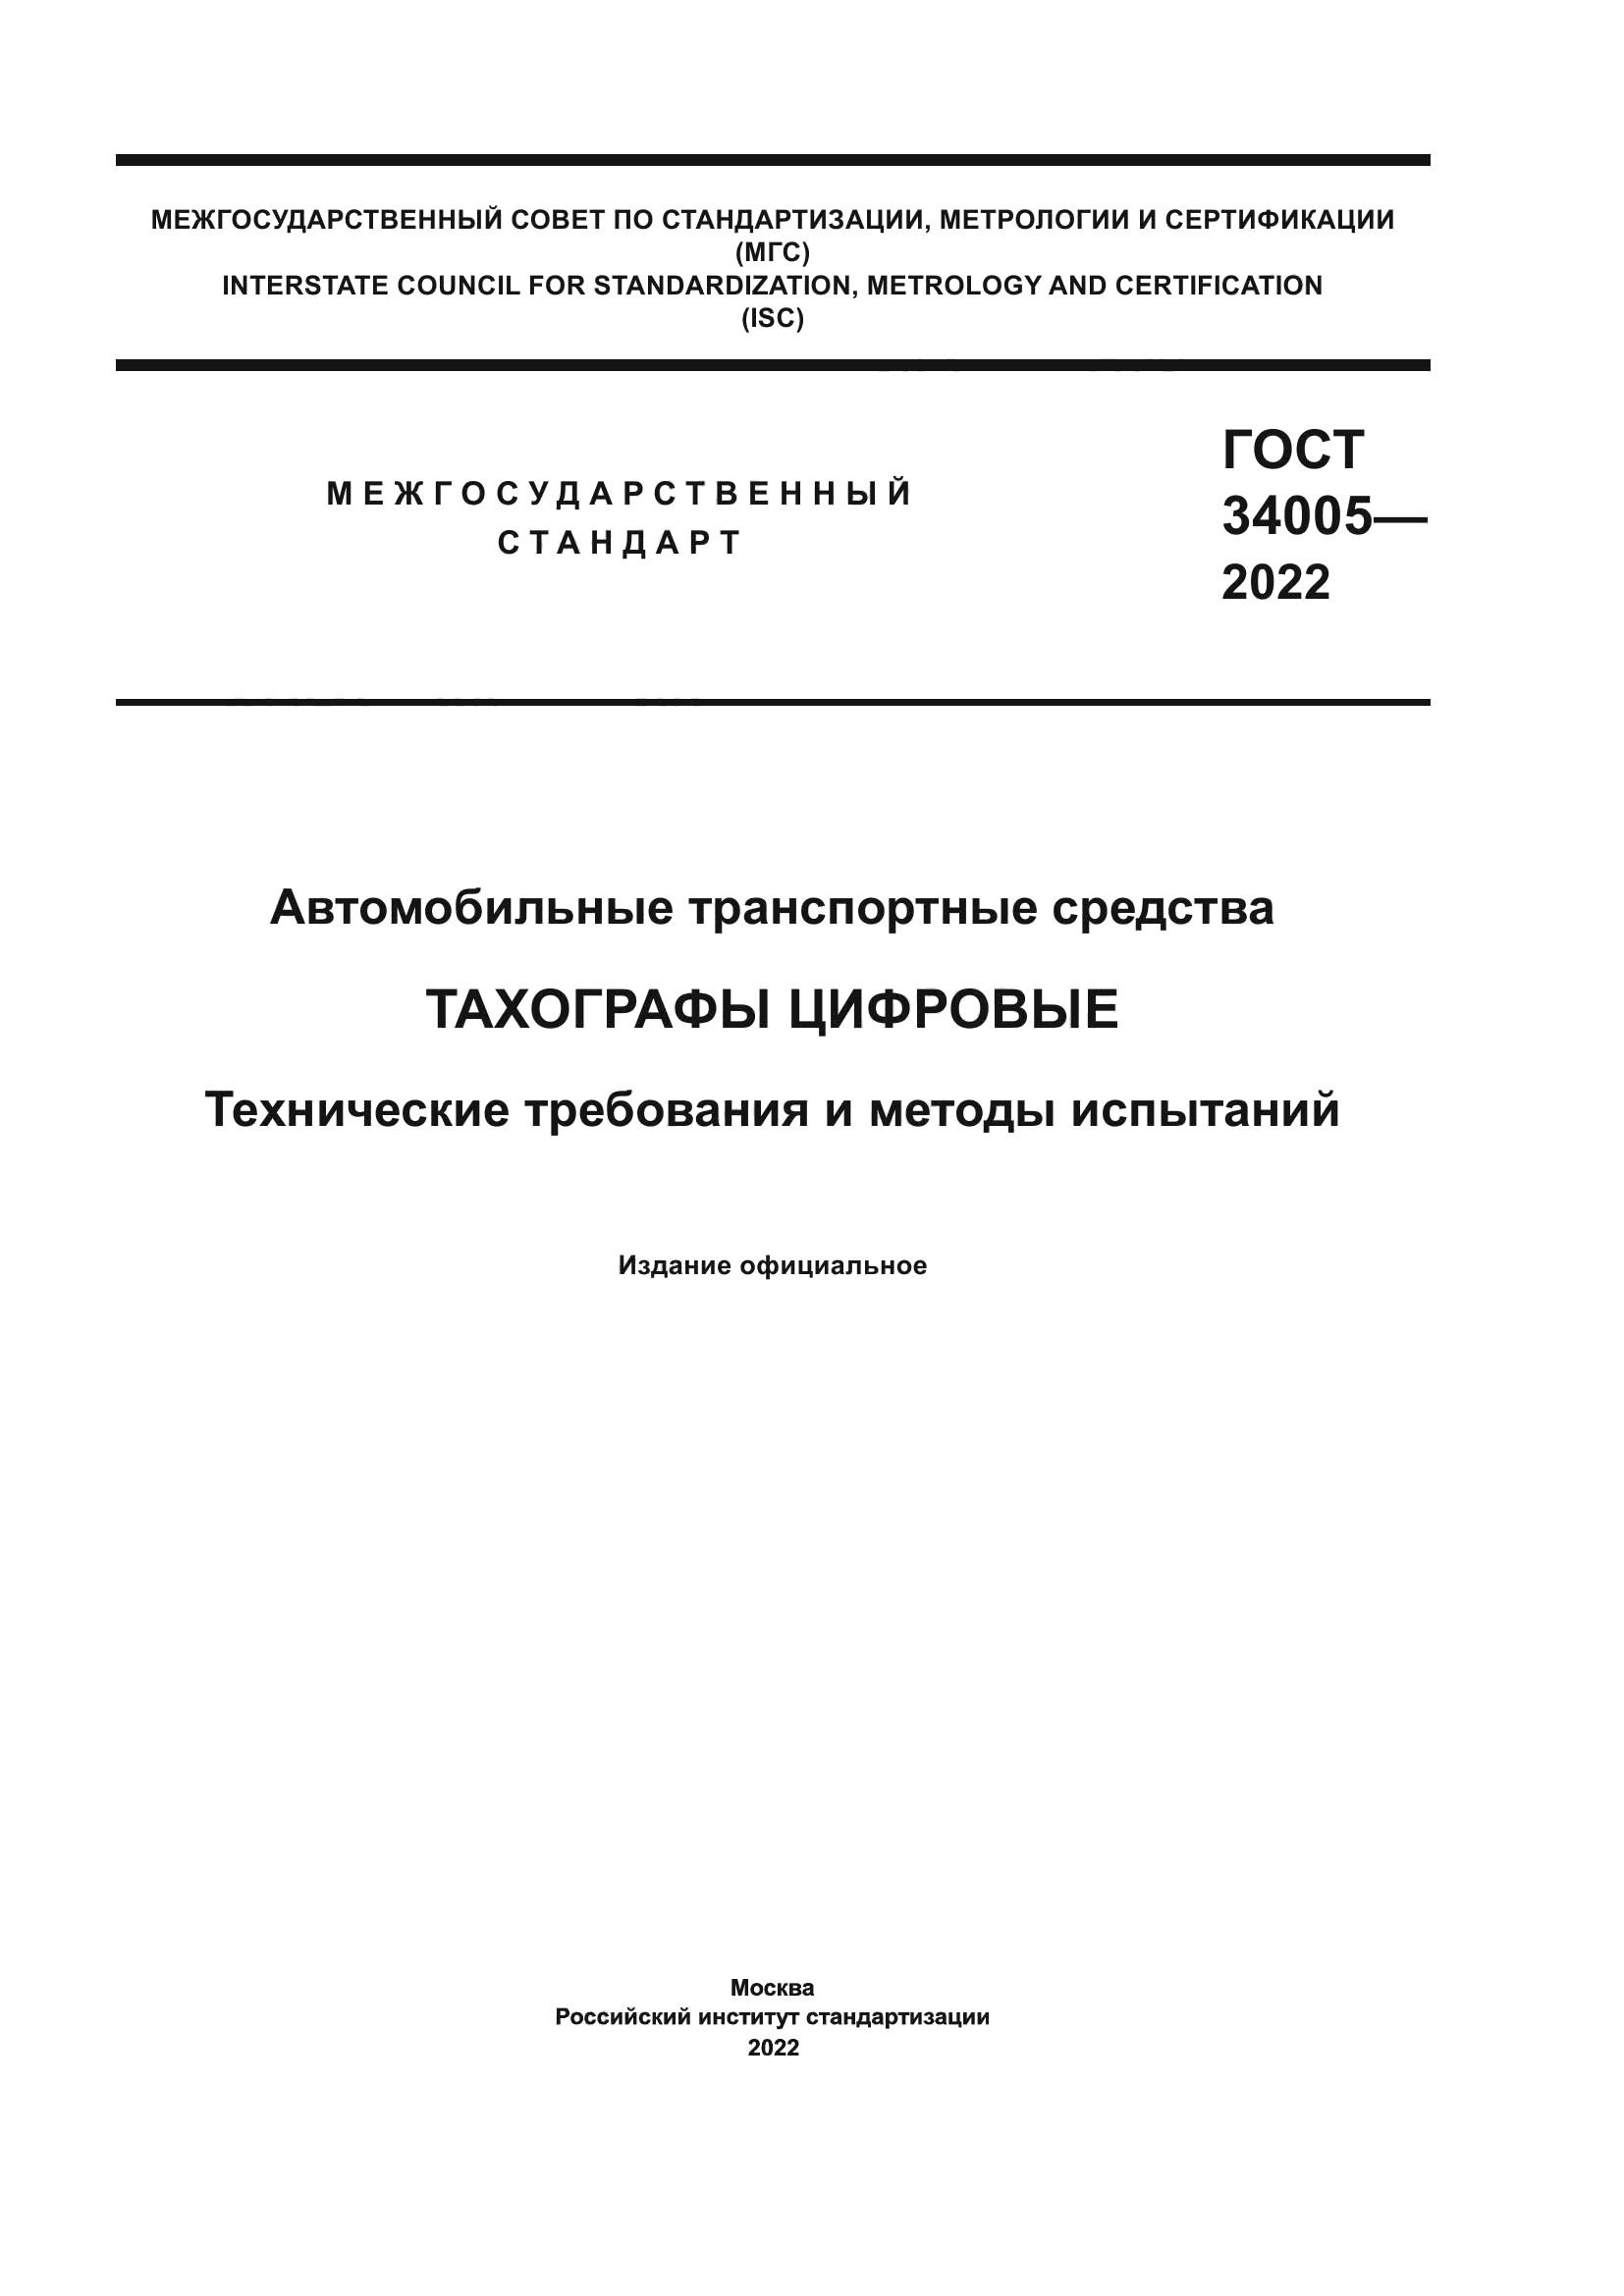 ГОСТ 34005-2022